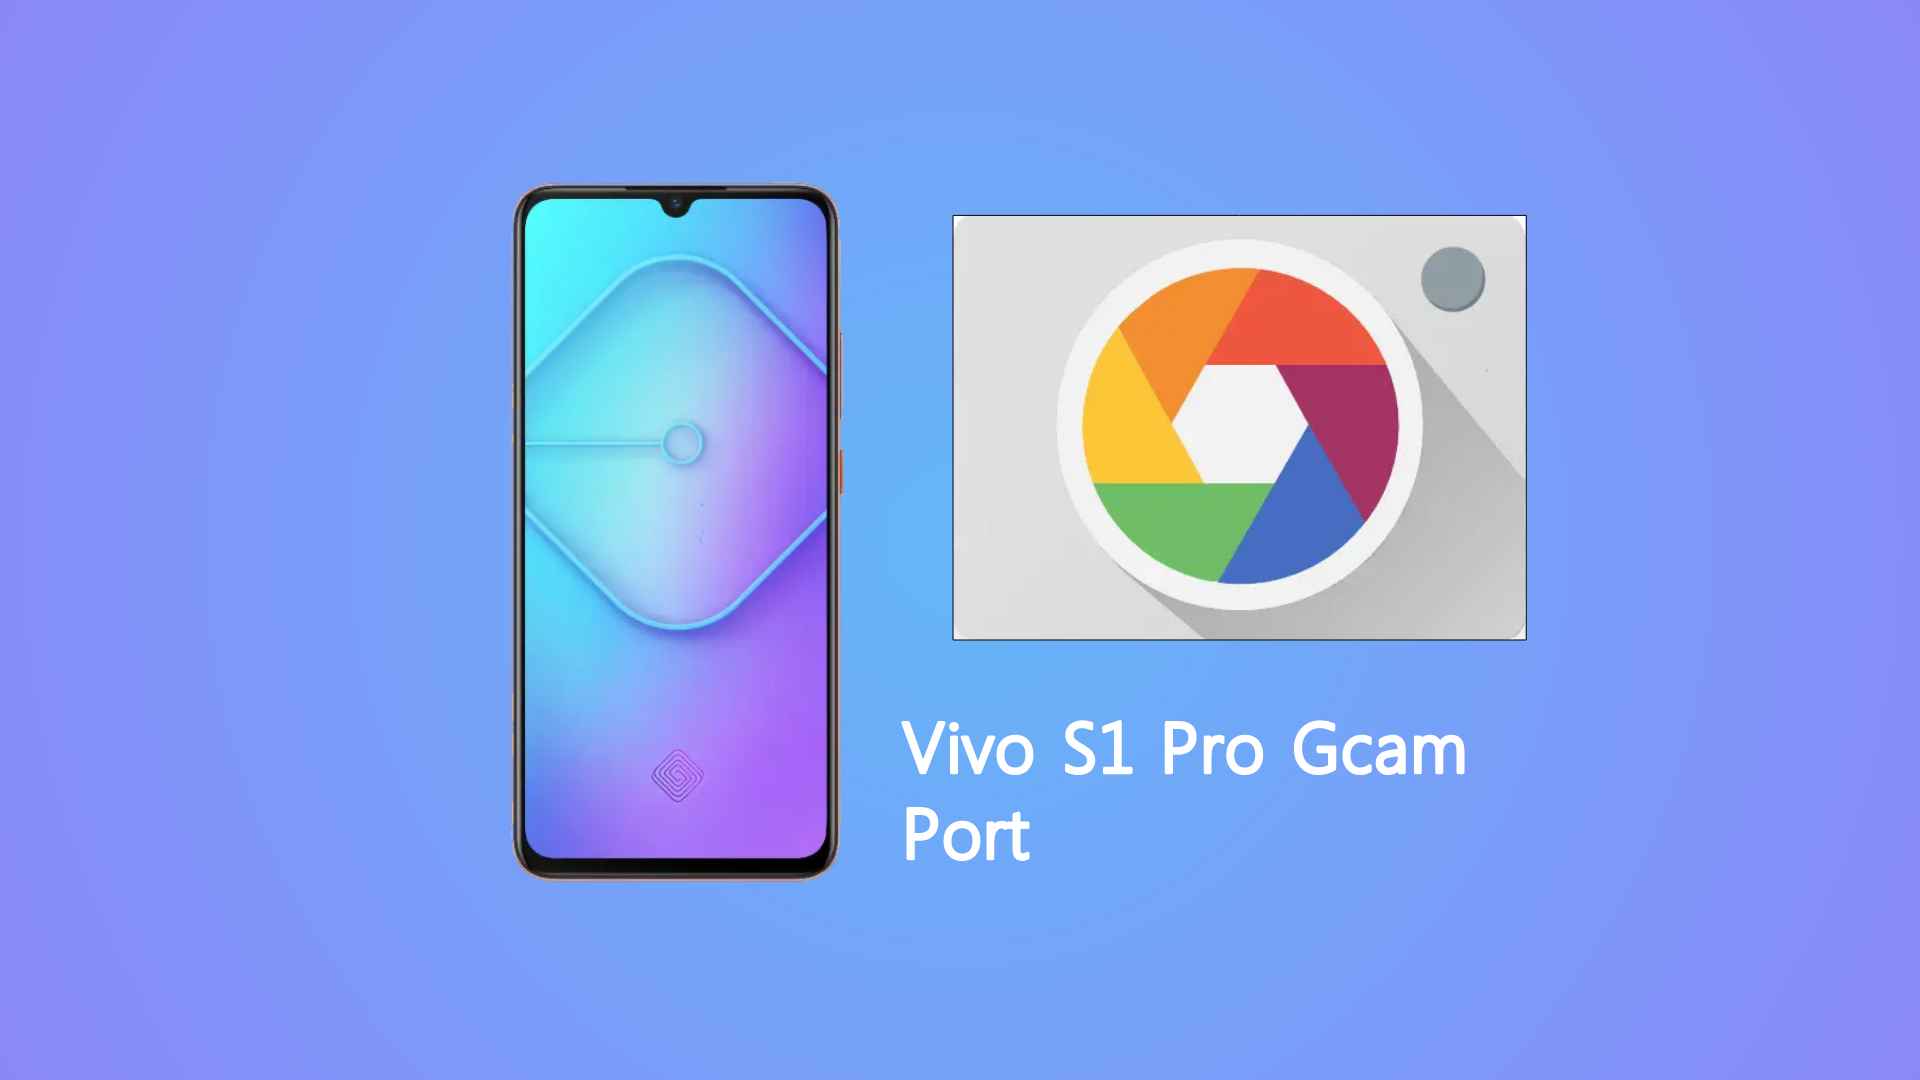 Vivo S1 Pro Gcam Port